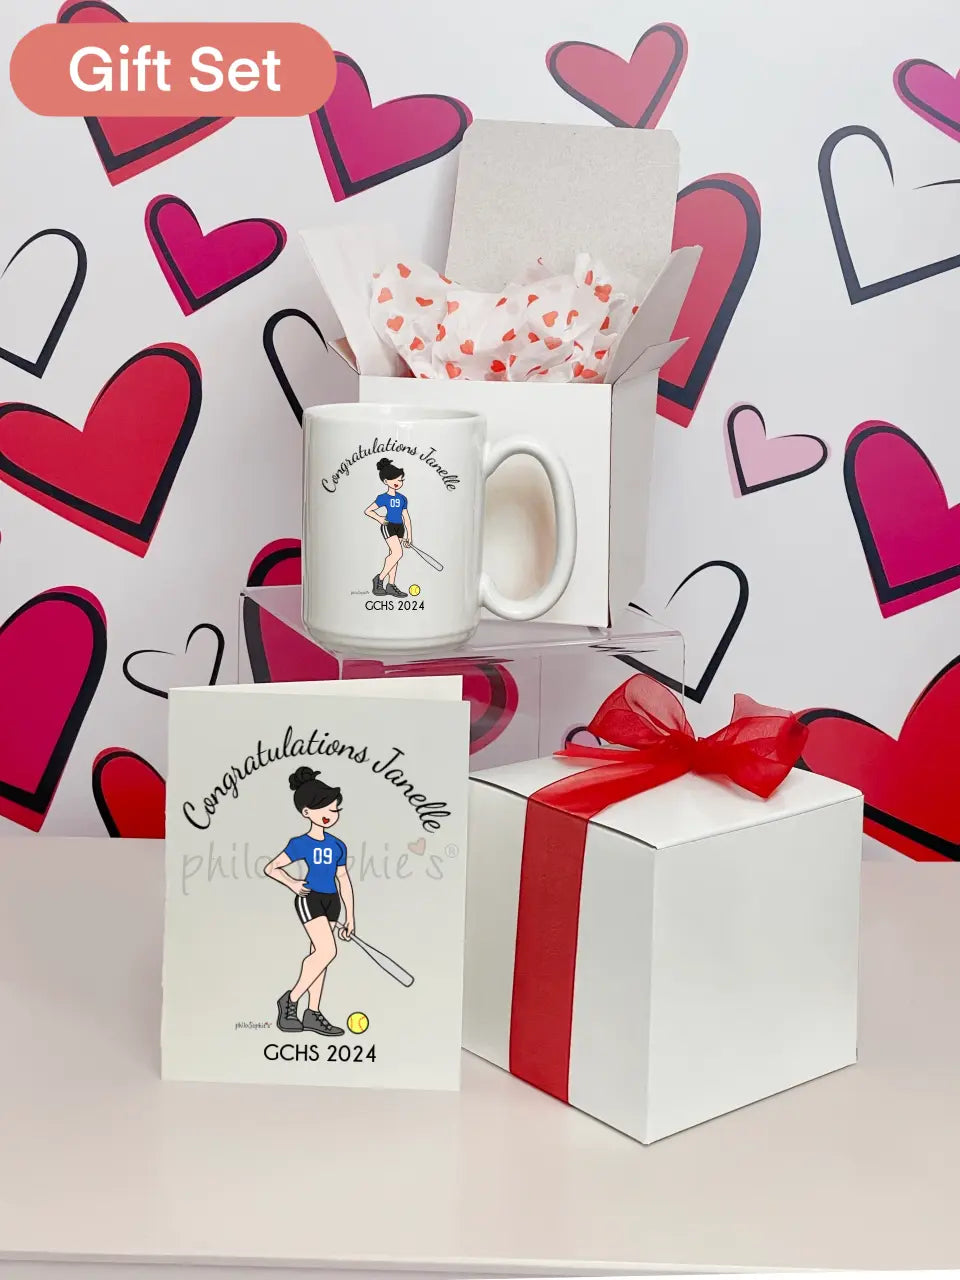 Personalized Ceramic Mug ~ Sports philoSophie's